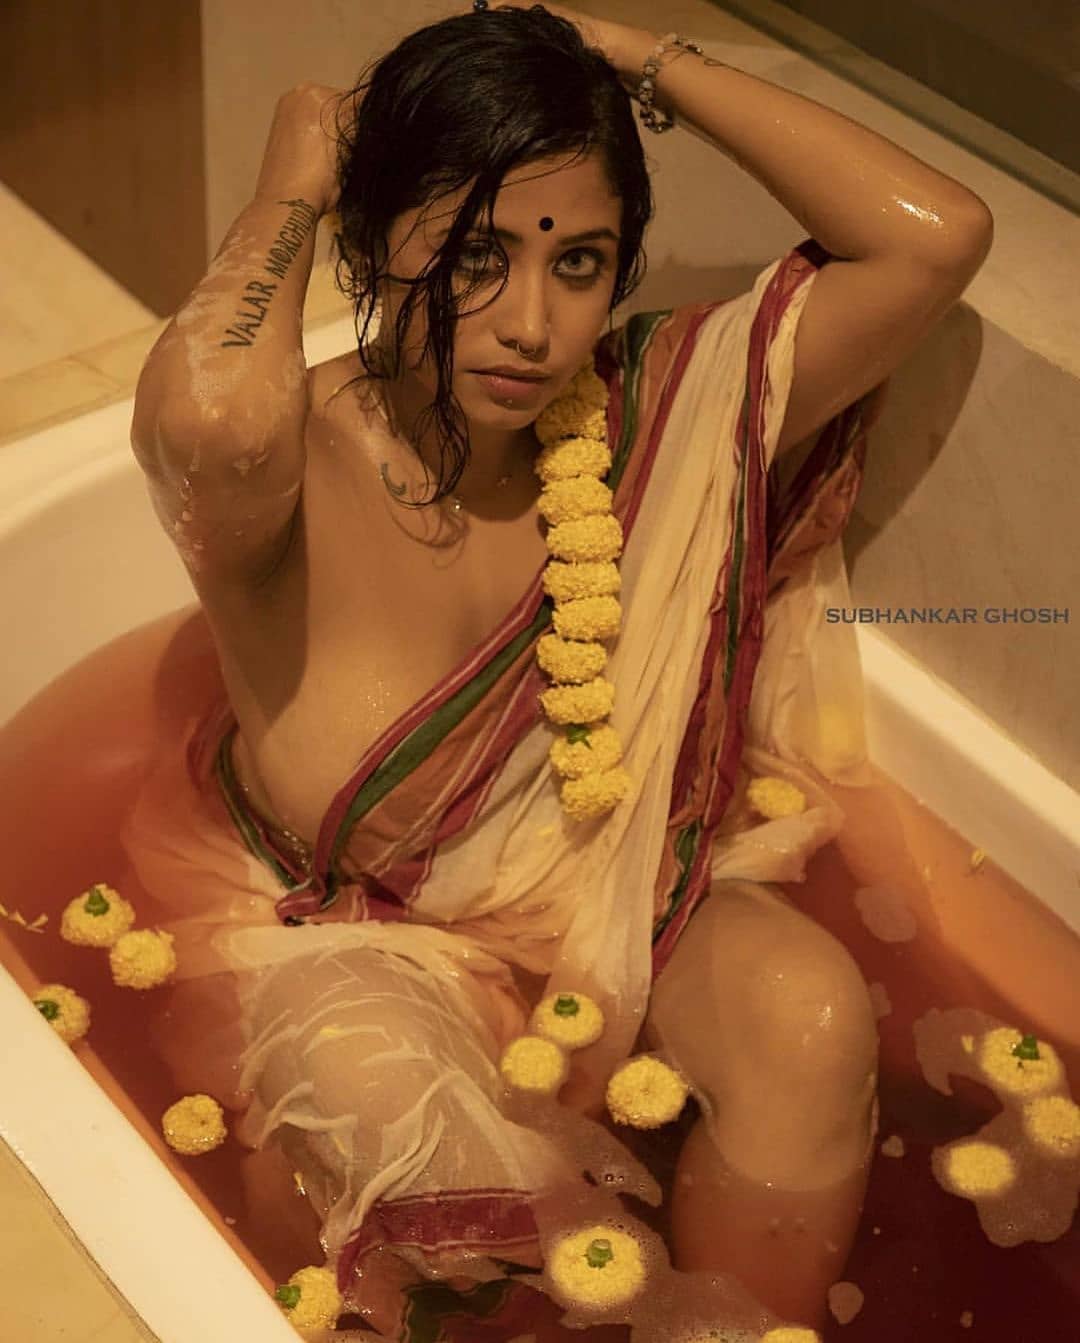 Big breast boob girl in bangla deshi - XXX photo